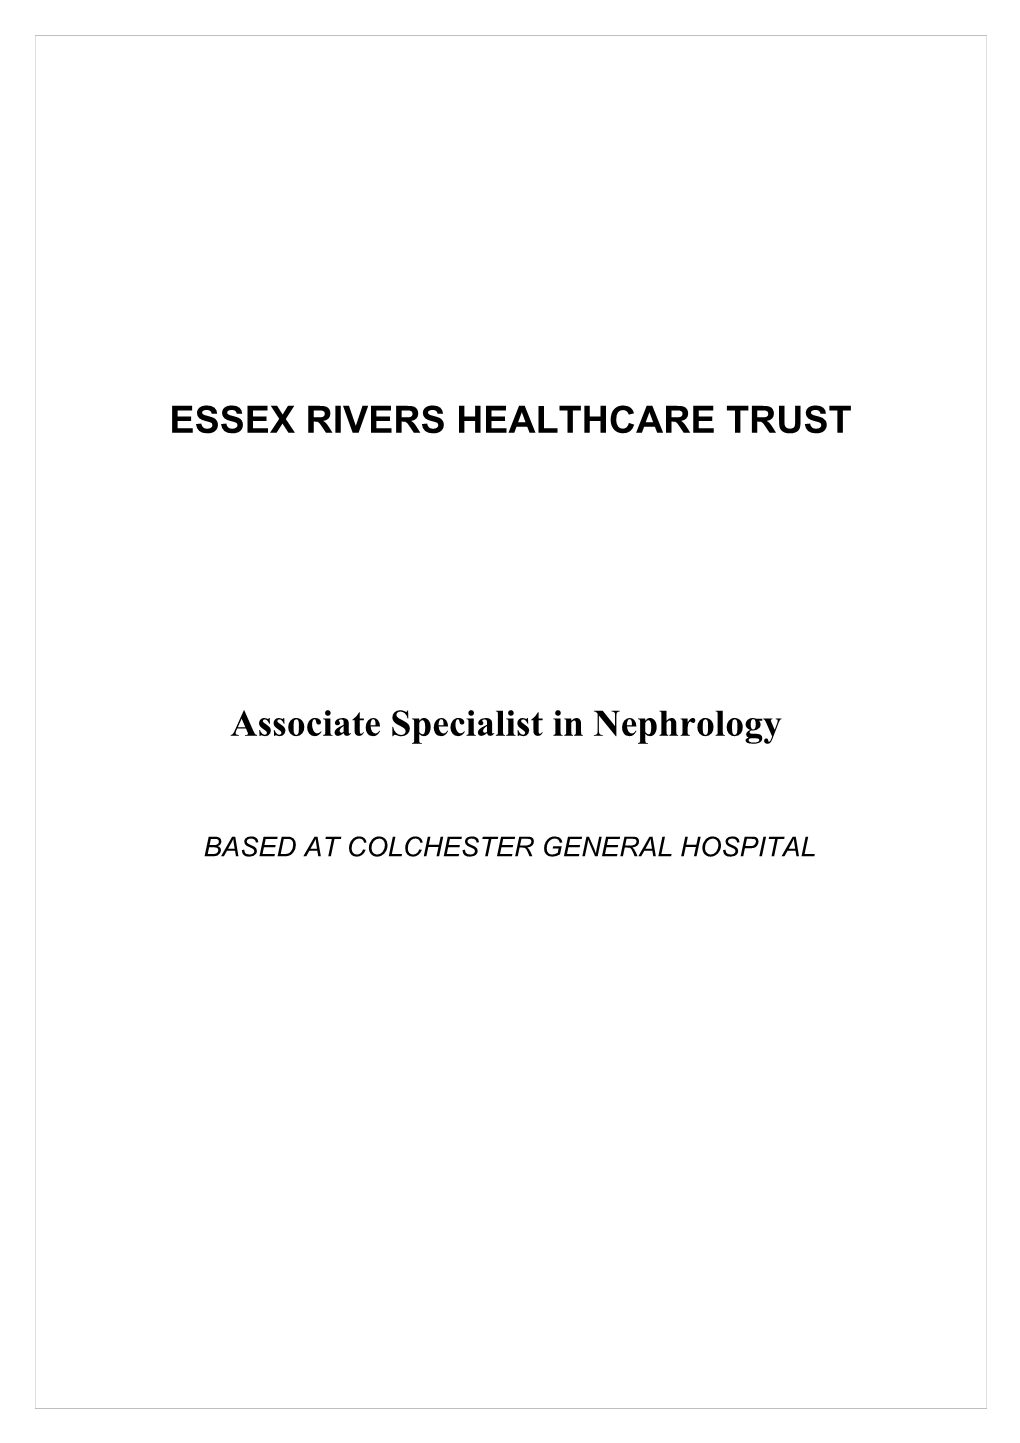 Essex Rivers Healthcare Trust